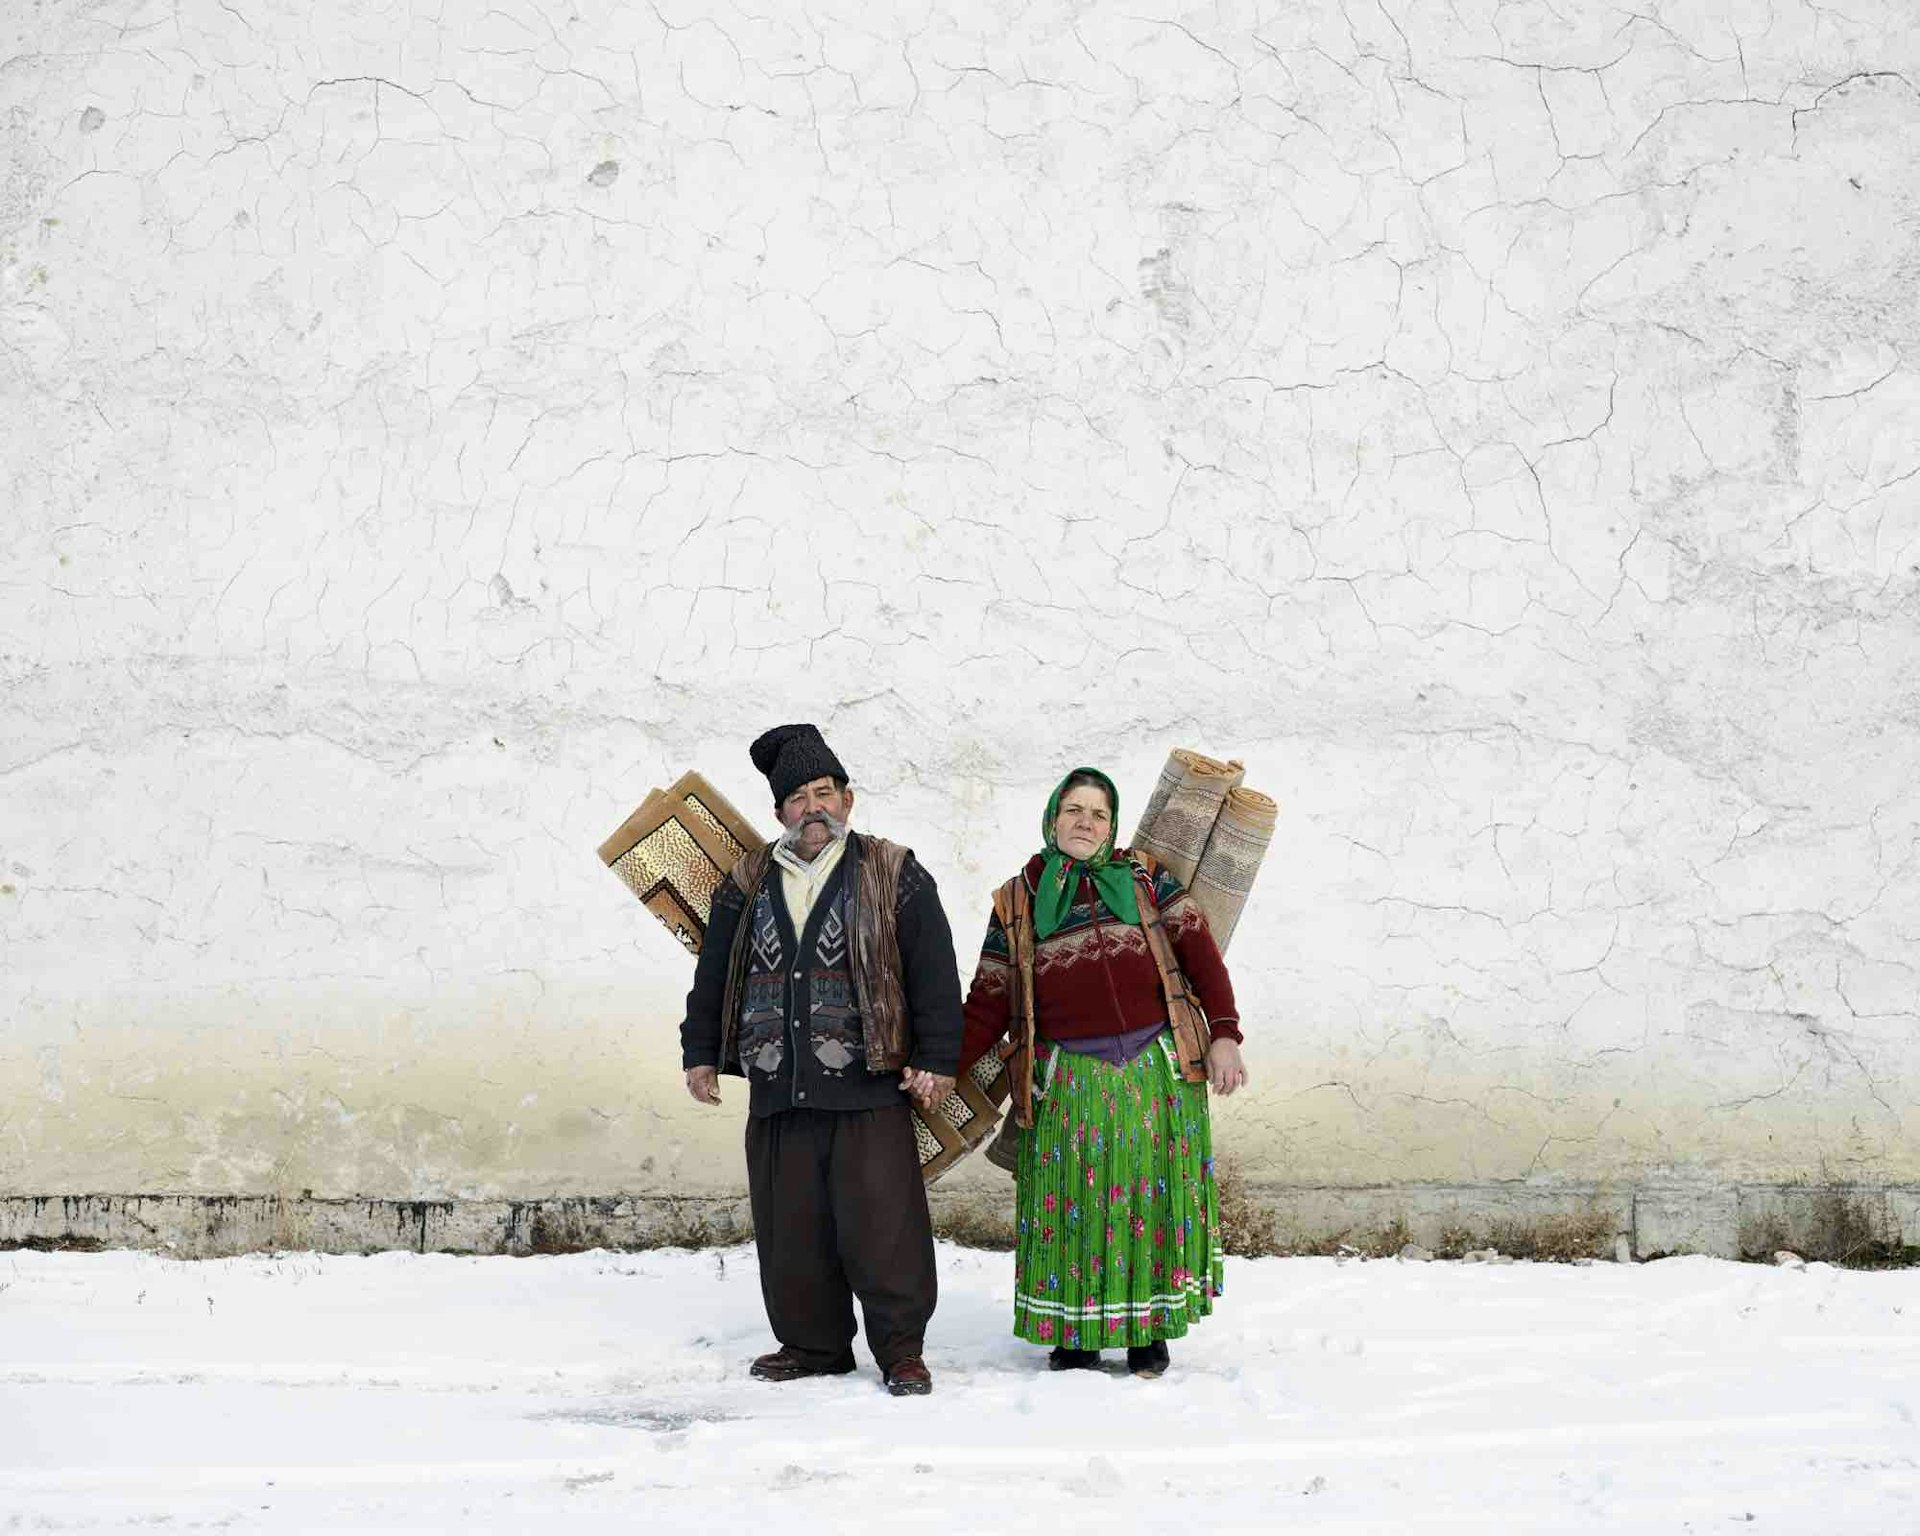 Carpet Sellers (Pojorata, North Romania), 2012 © Tamas Dezso. Courtesy of The Photographers’ Gallery.